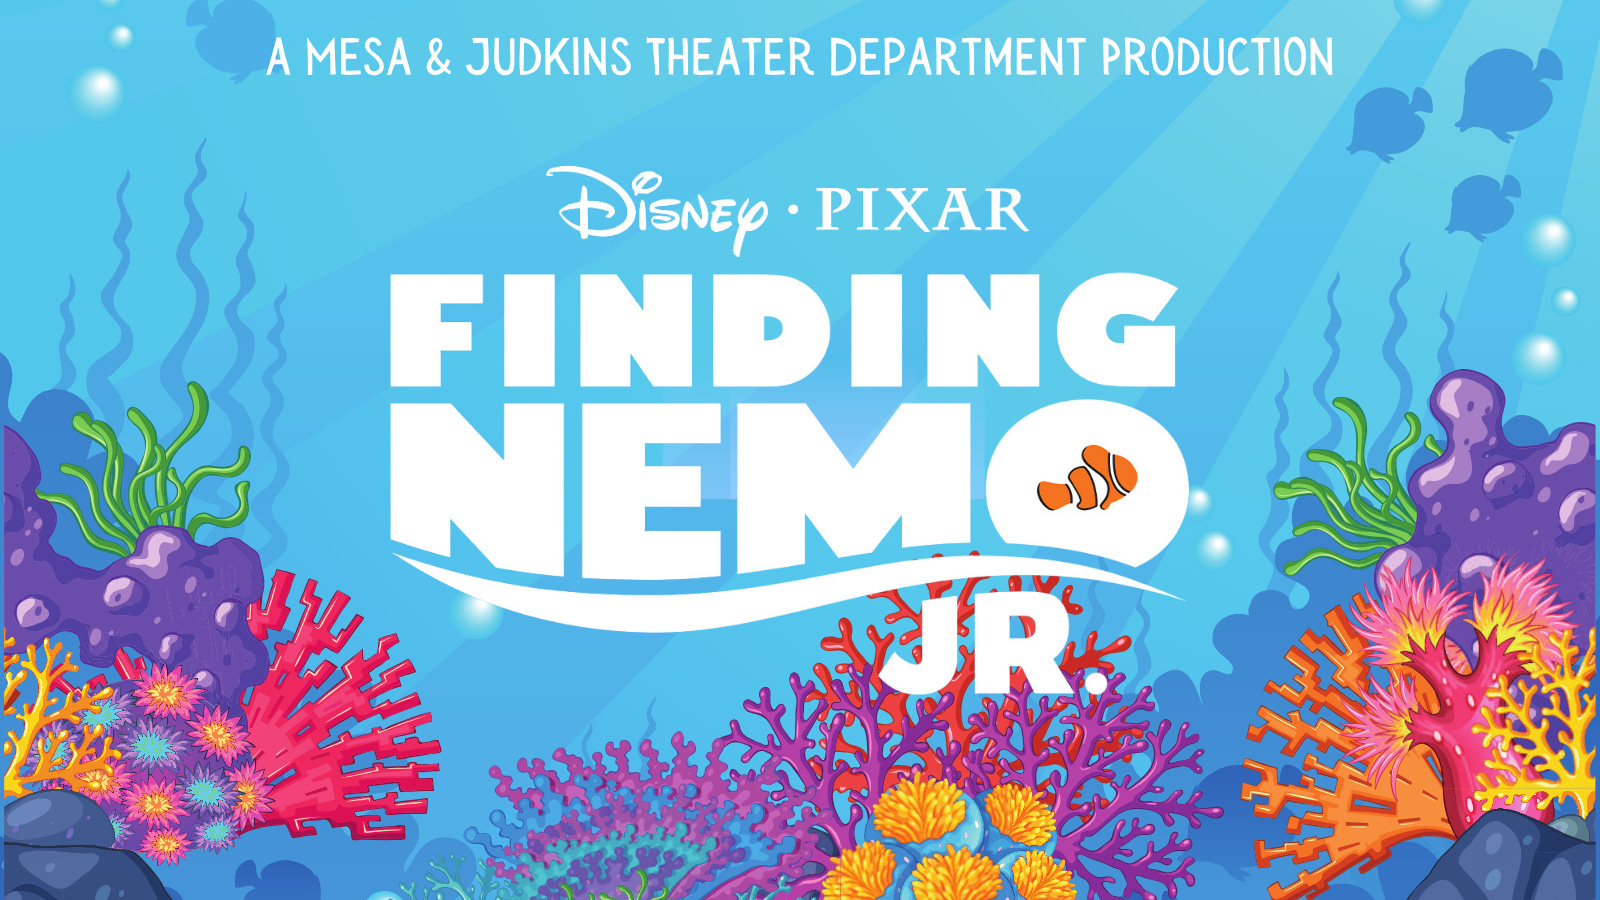 Mesa & Judkins Theater Department presents Disney Pixar Finding Nemo JR.